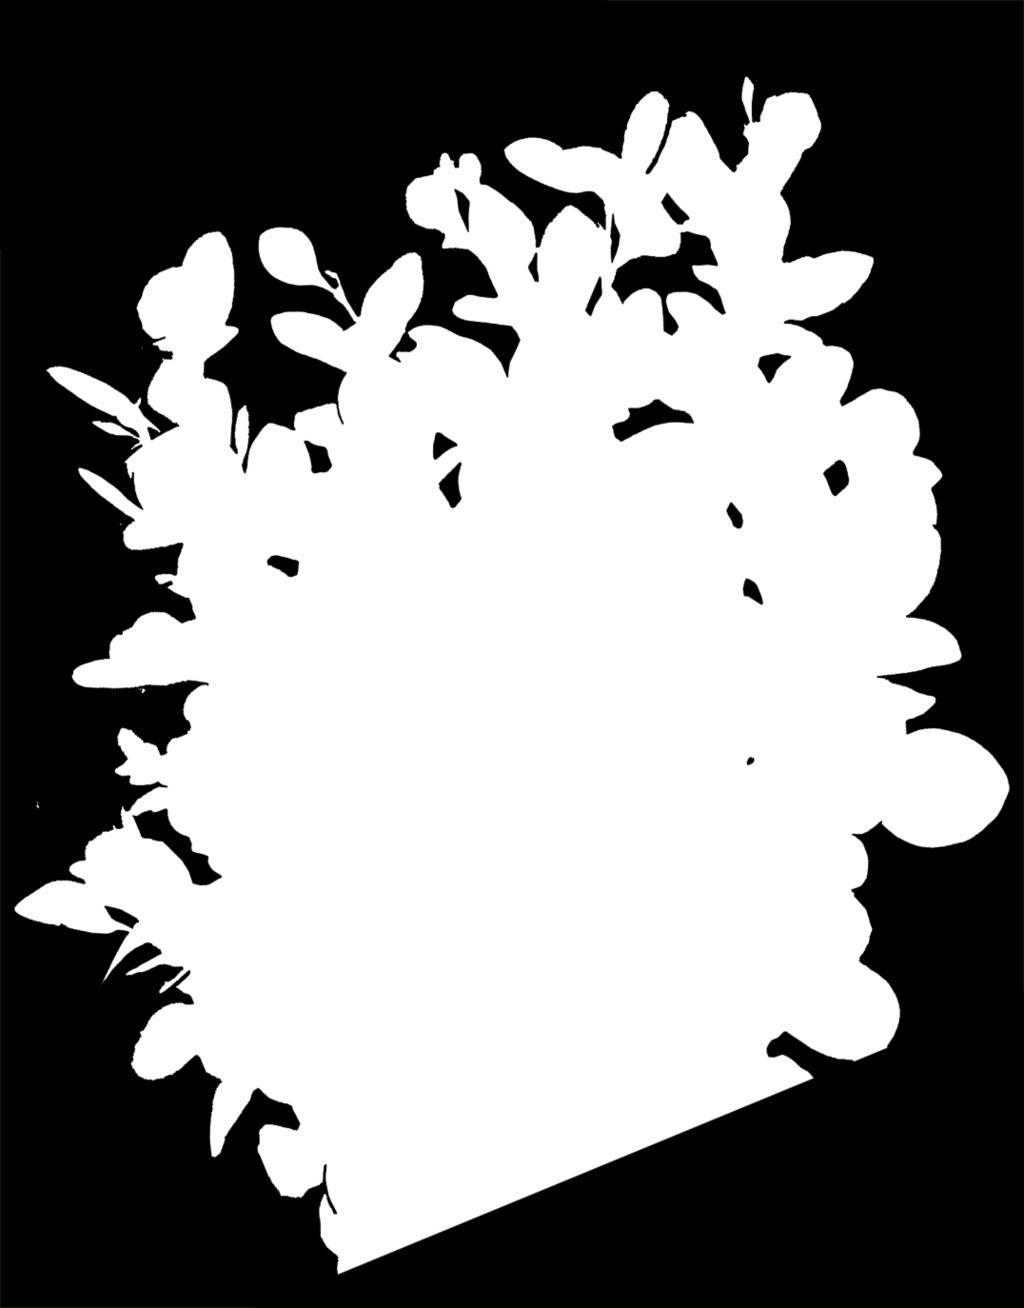 Collection Plant Name New License Request 1 Leucadendron LN2 2 Spirea WALBERTON Plumtastic 3 Weigela HILLIER Mango 4 Weigela HILLIER Oriental Pearl Summary - Tree Portfolio # Genus Collection Plant